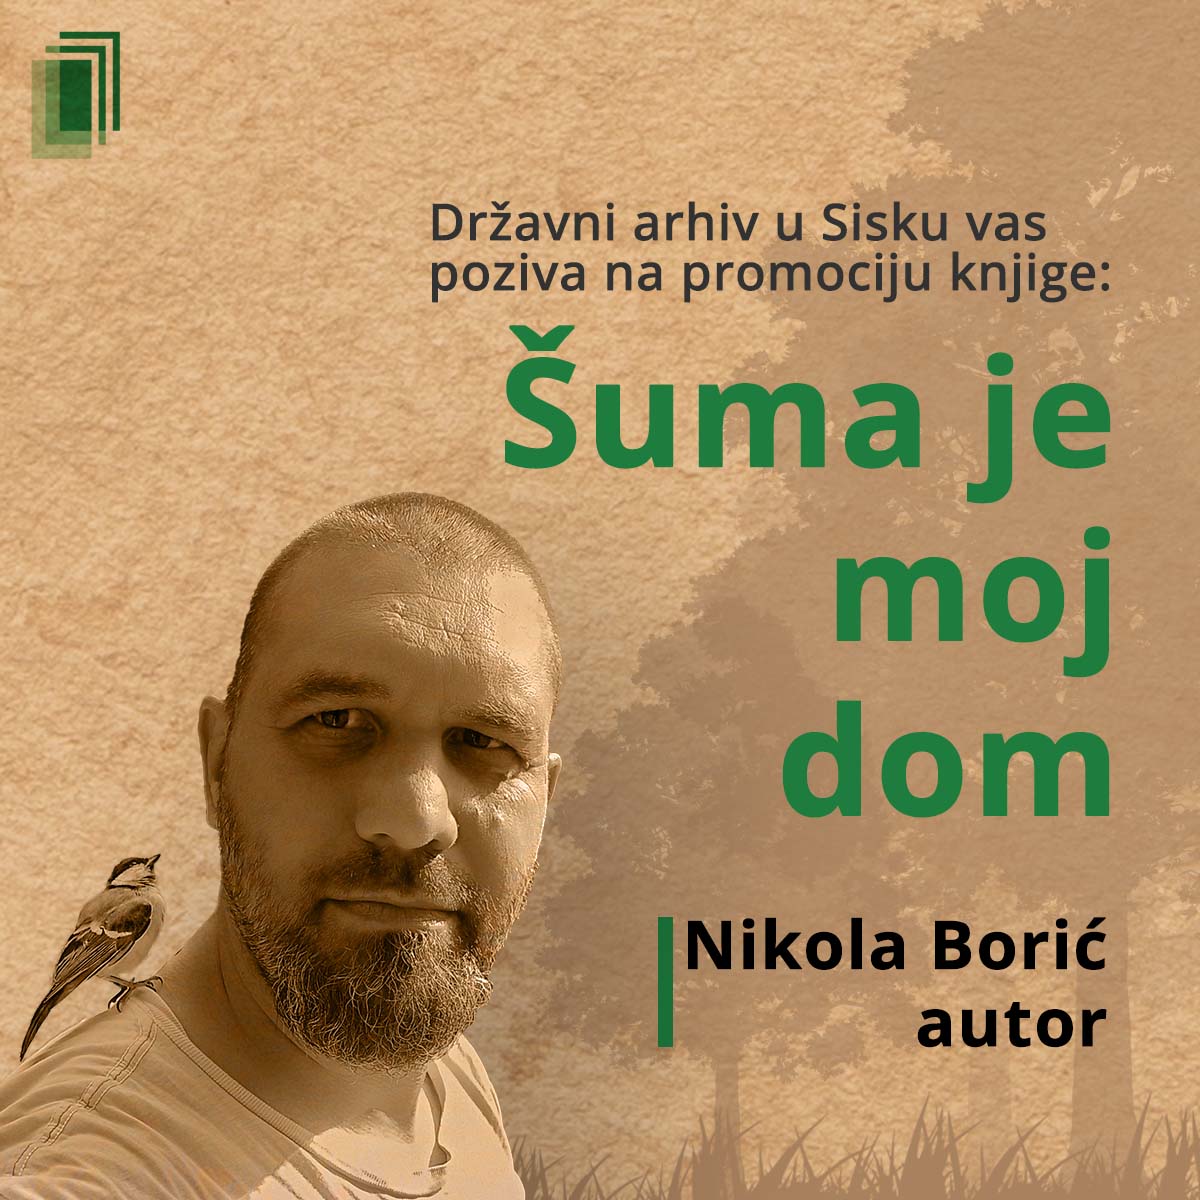 You are currently viewing Predstavljanje knjige “Šuma je moj dom” autora Nikole Borić